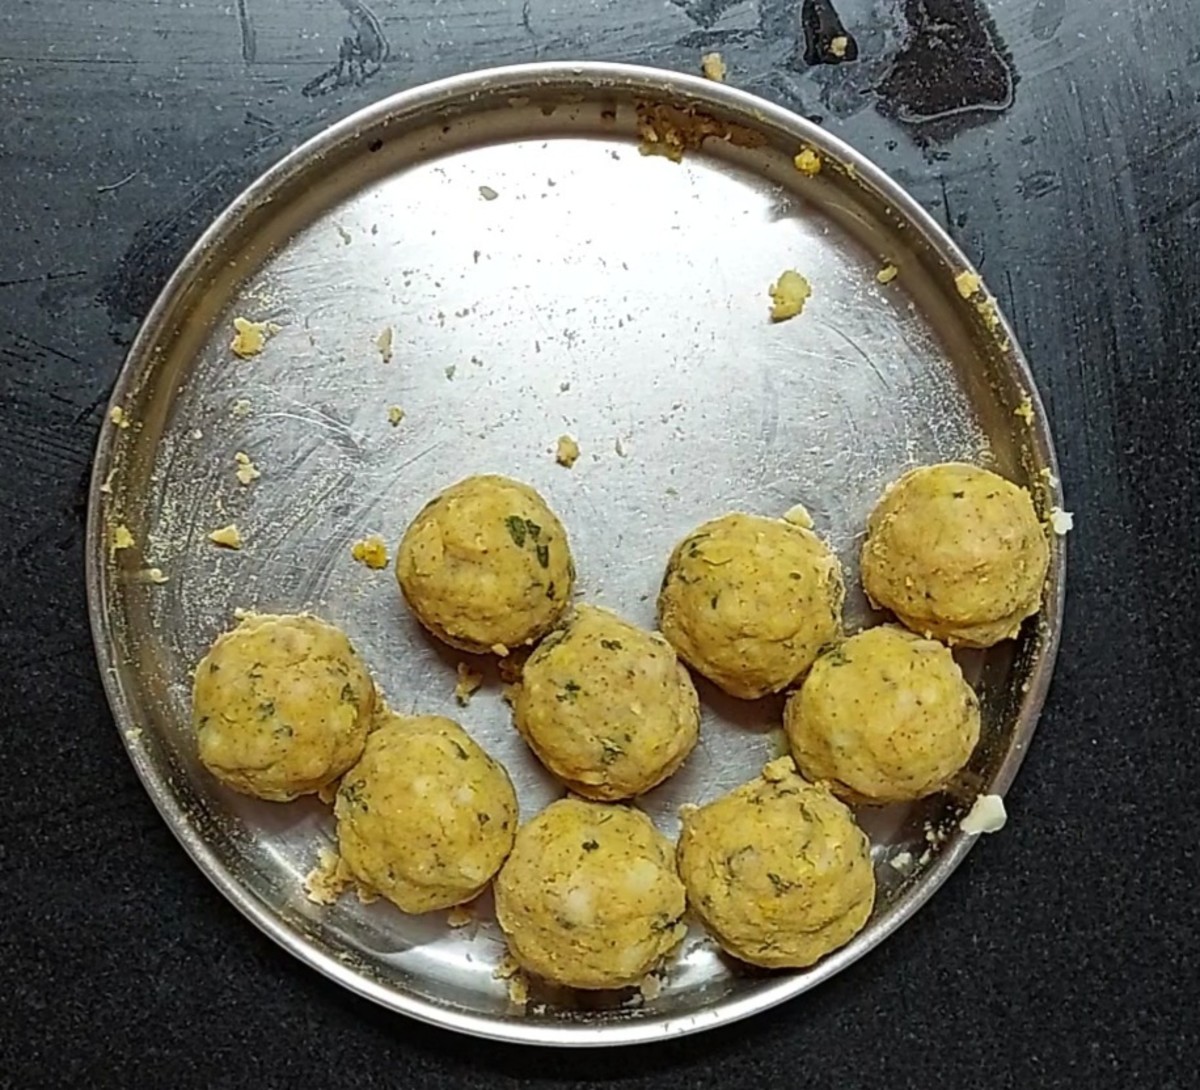 Make medium-sized balls of the potato mixture and set aside.